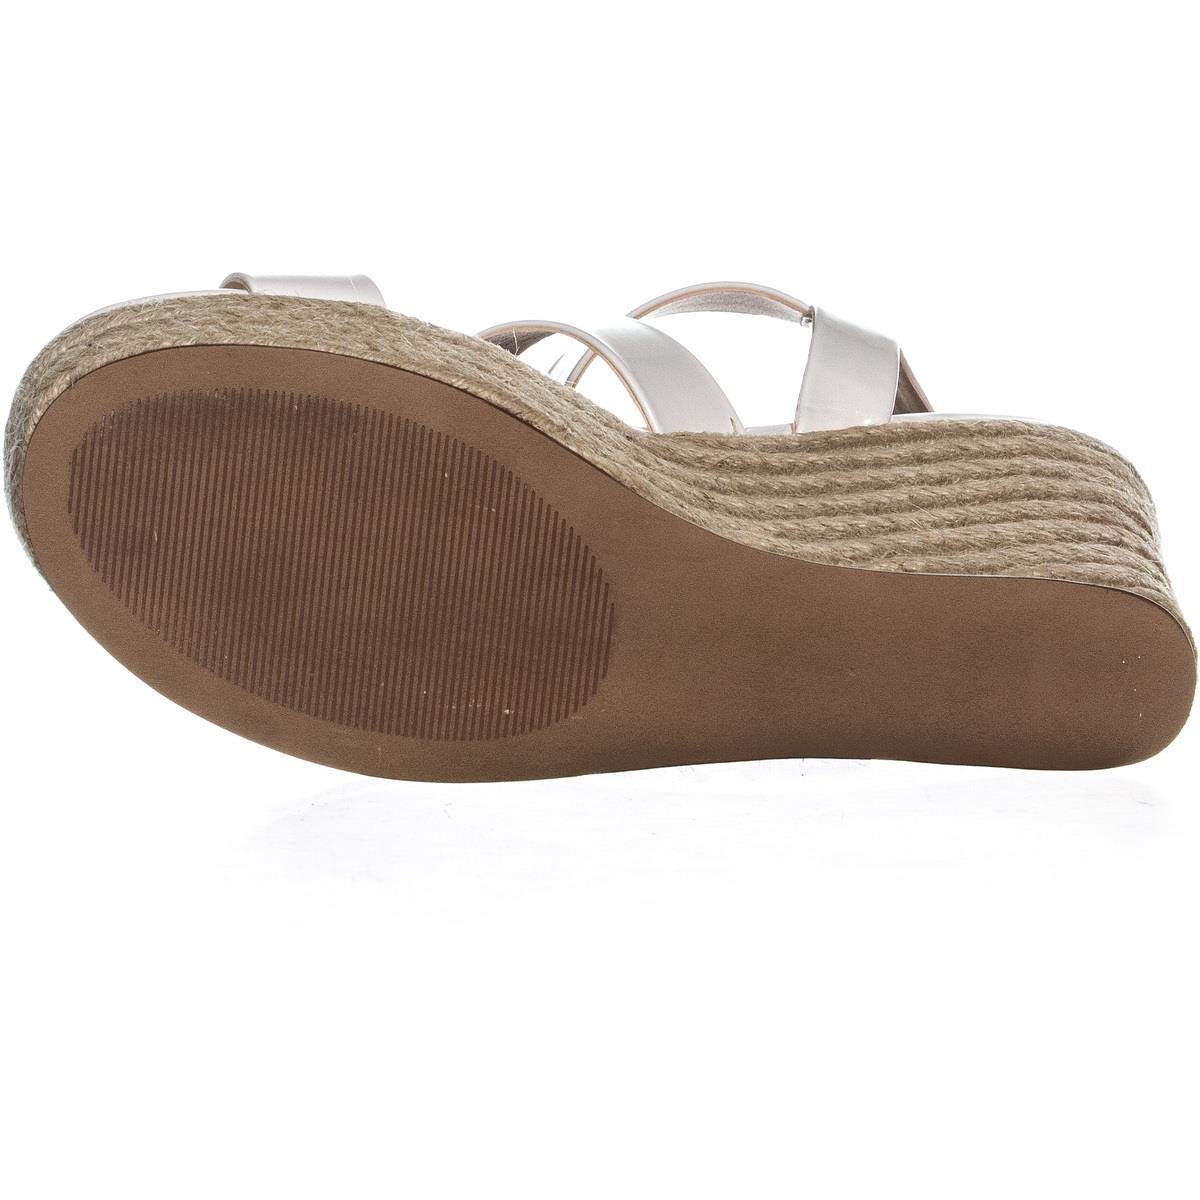 Steve Madden Valery Platform Wedge Sandals, White, White Patent, Size ...